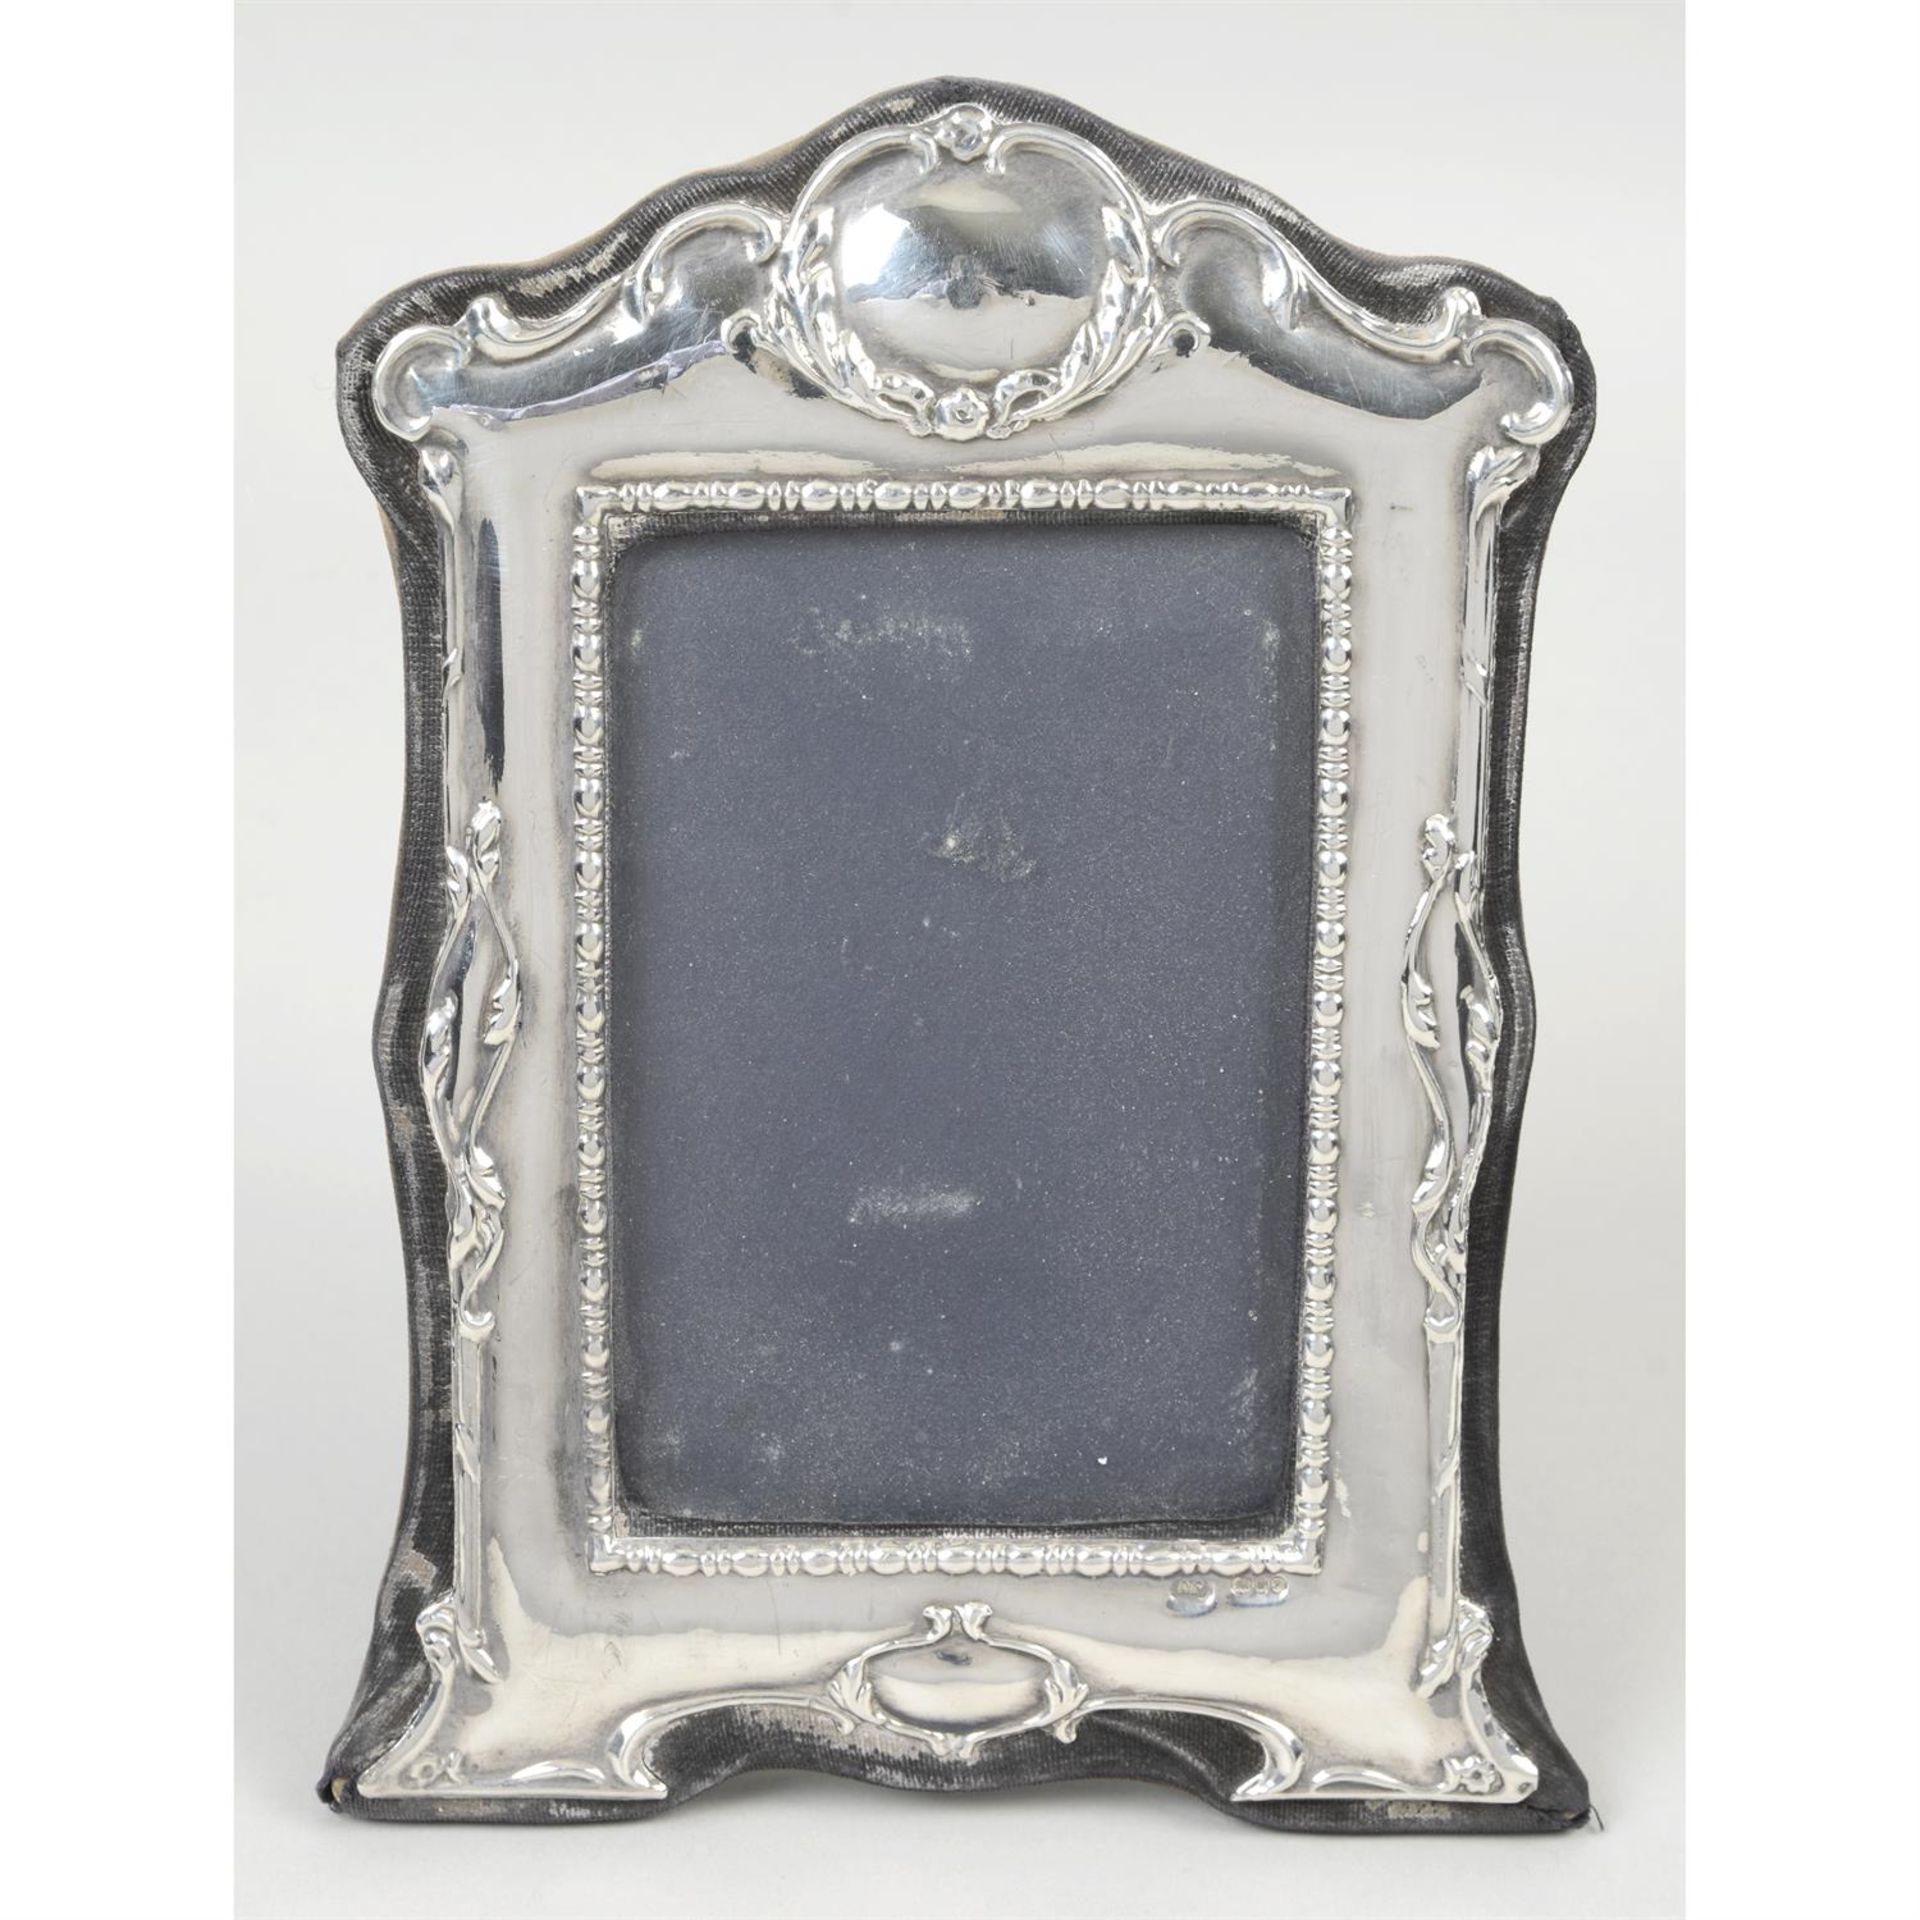 A modern silver mounted photograph frame.